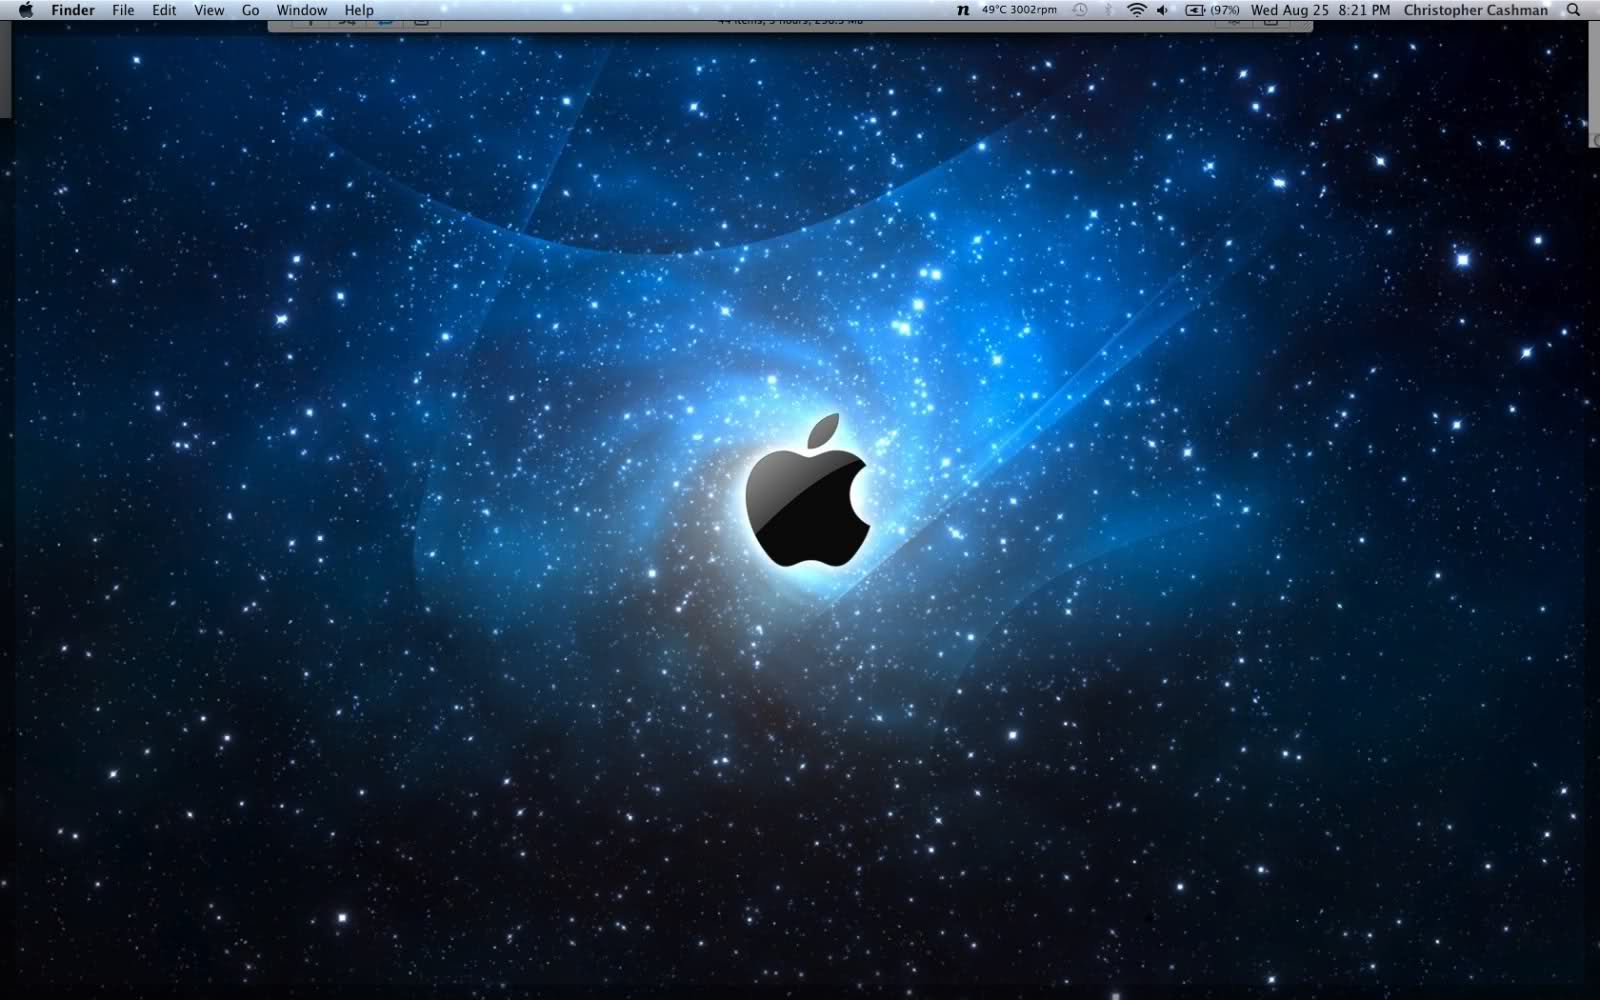 Apple Macbook Pro Wallpaper Sf